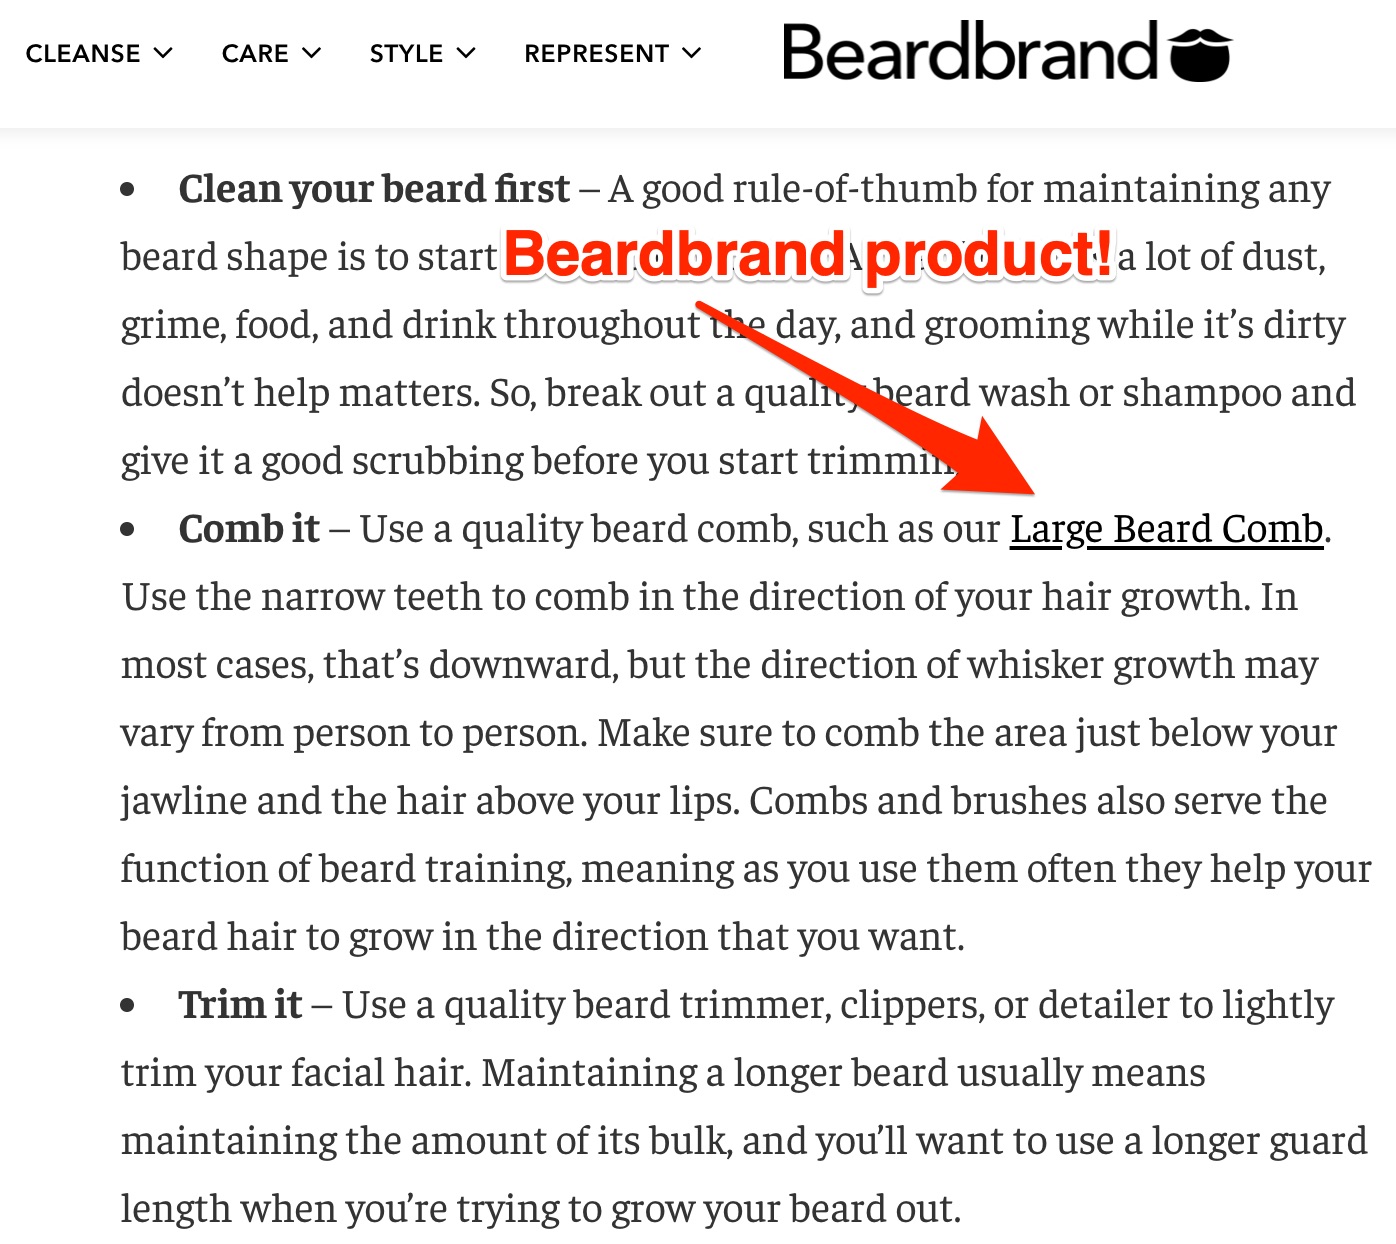 Beardbrand blog post